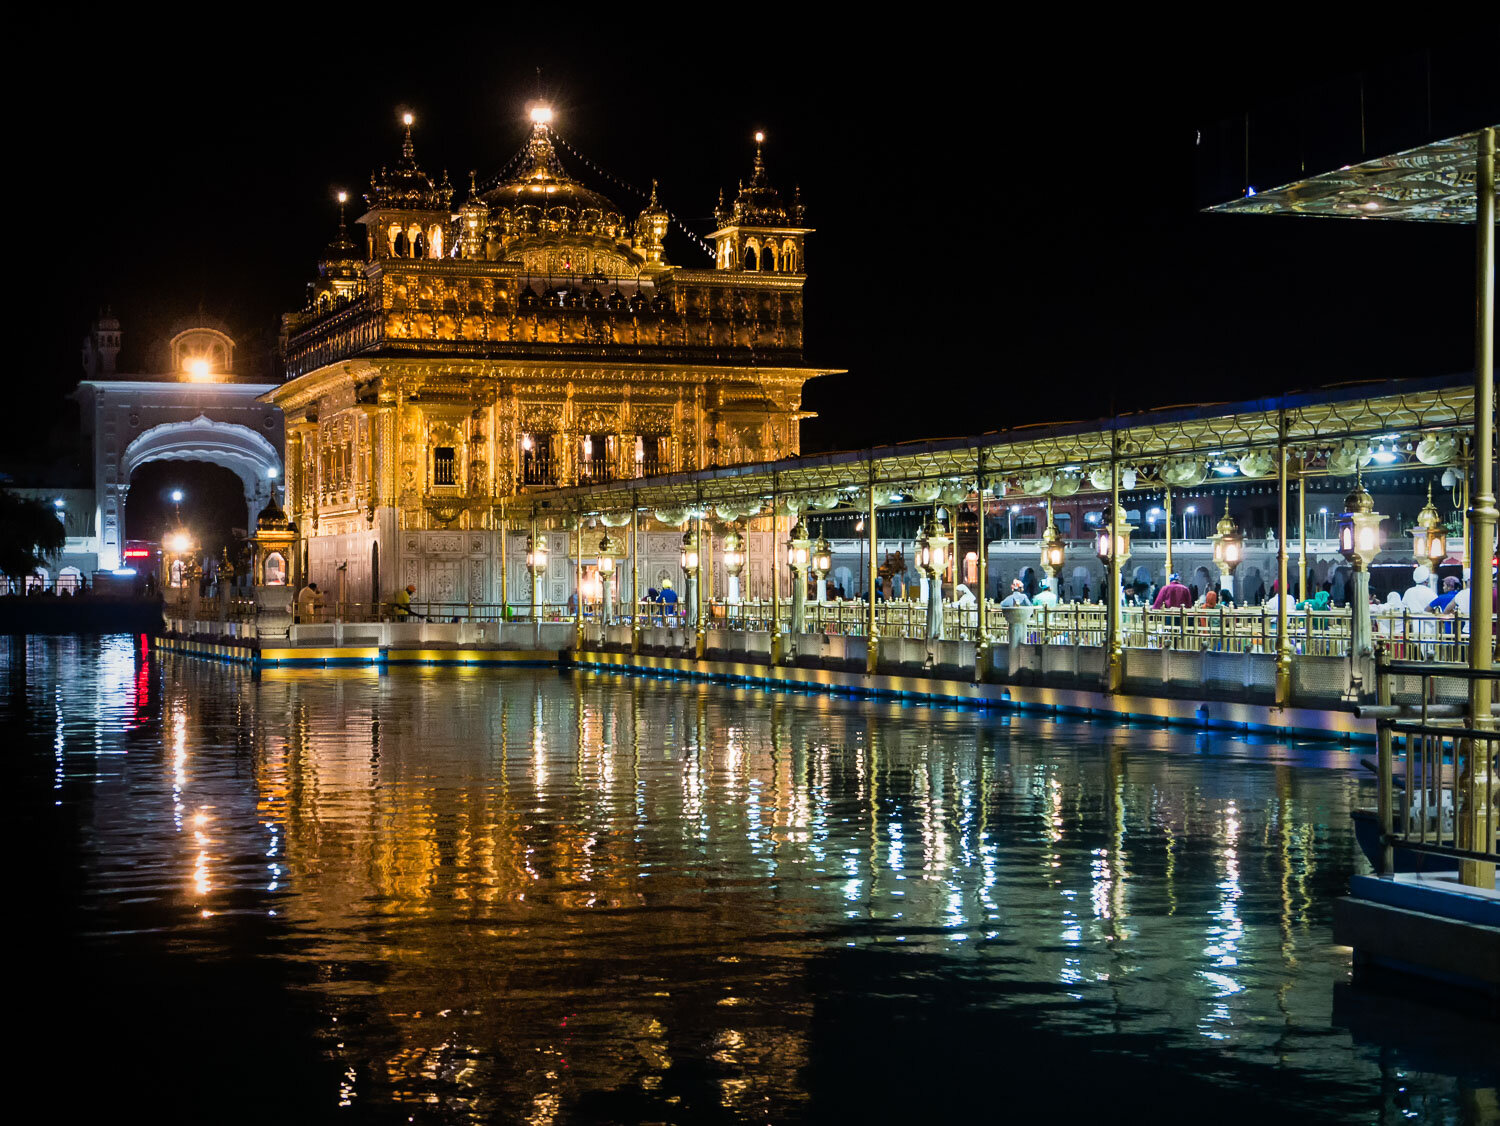 Golden Temple at Amritsar, India